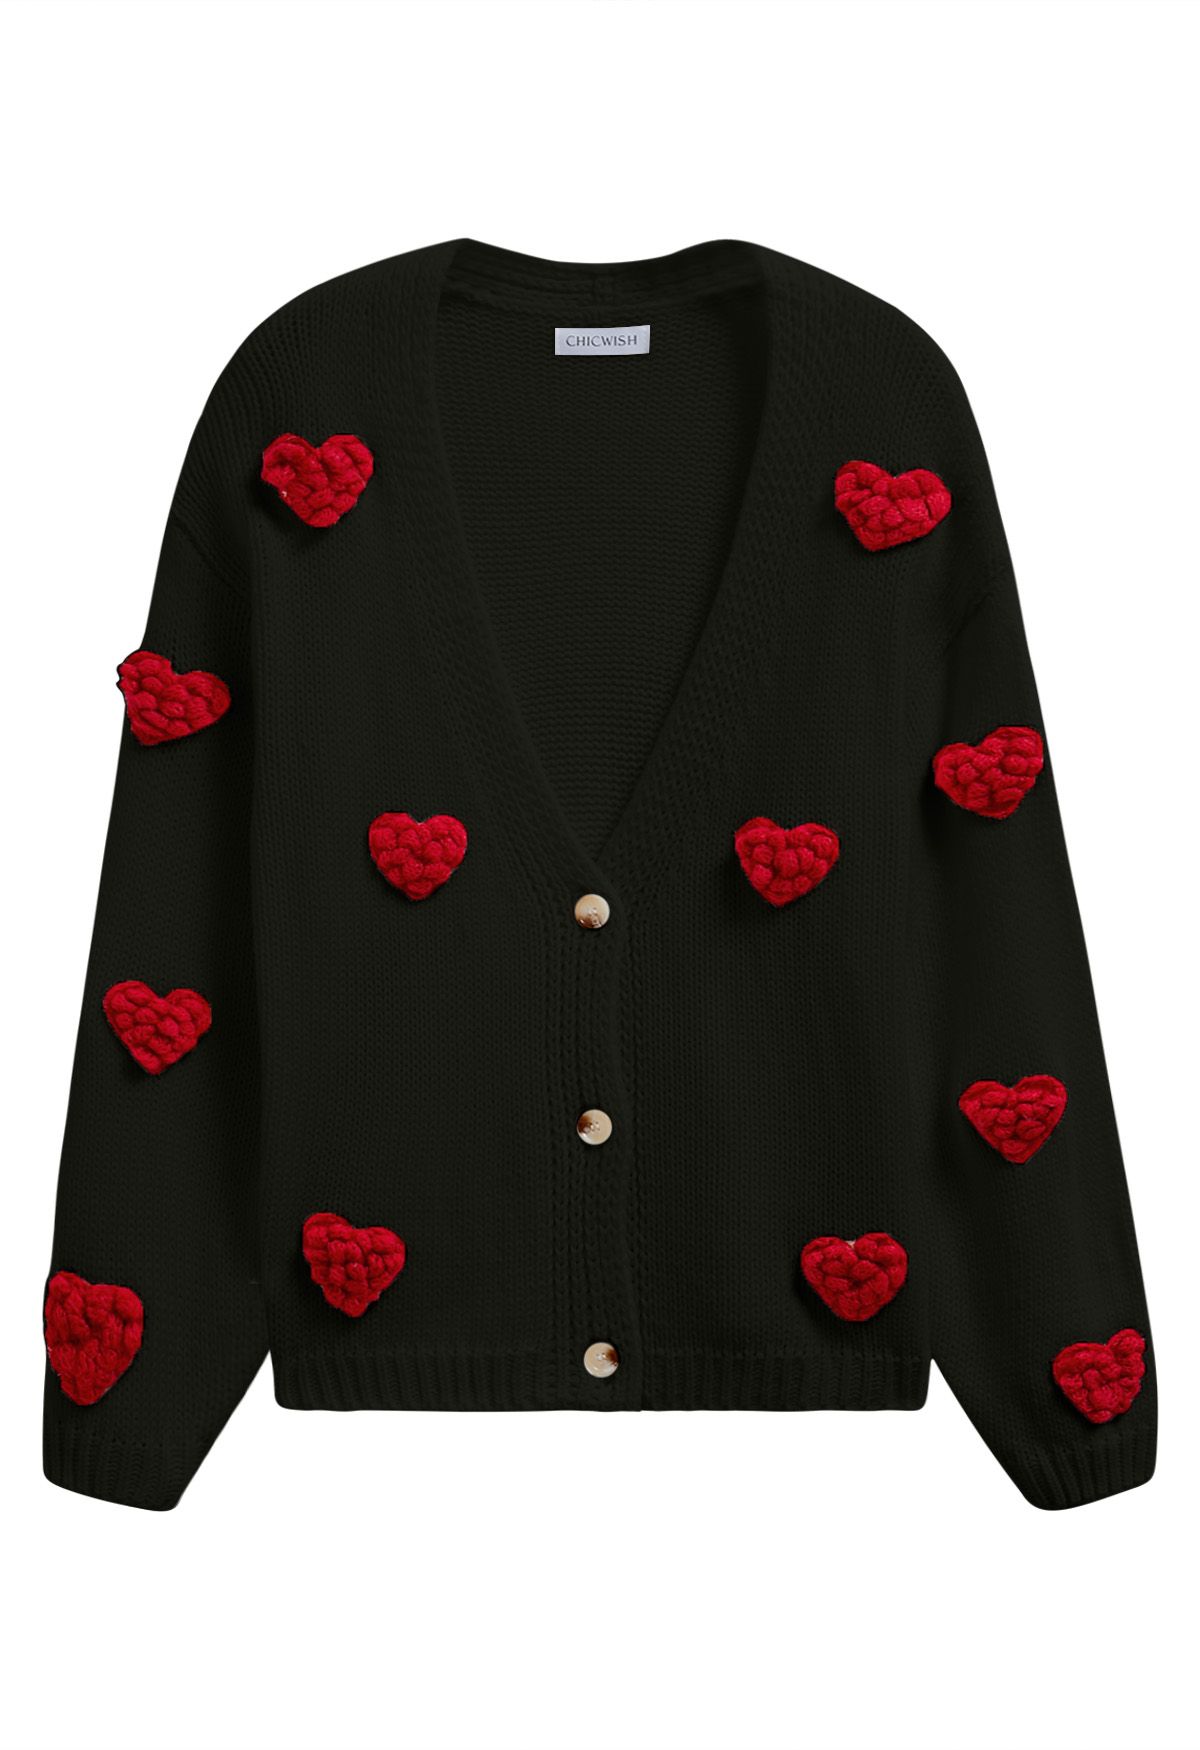 Romantic 3D Heart Knit Cardigan in Black